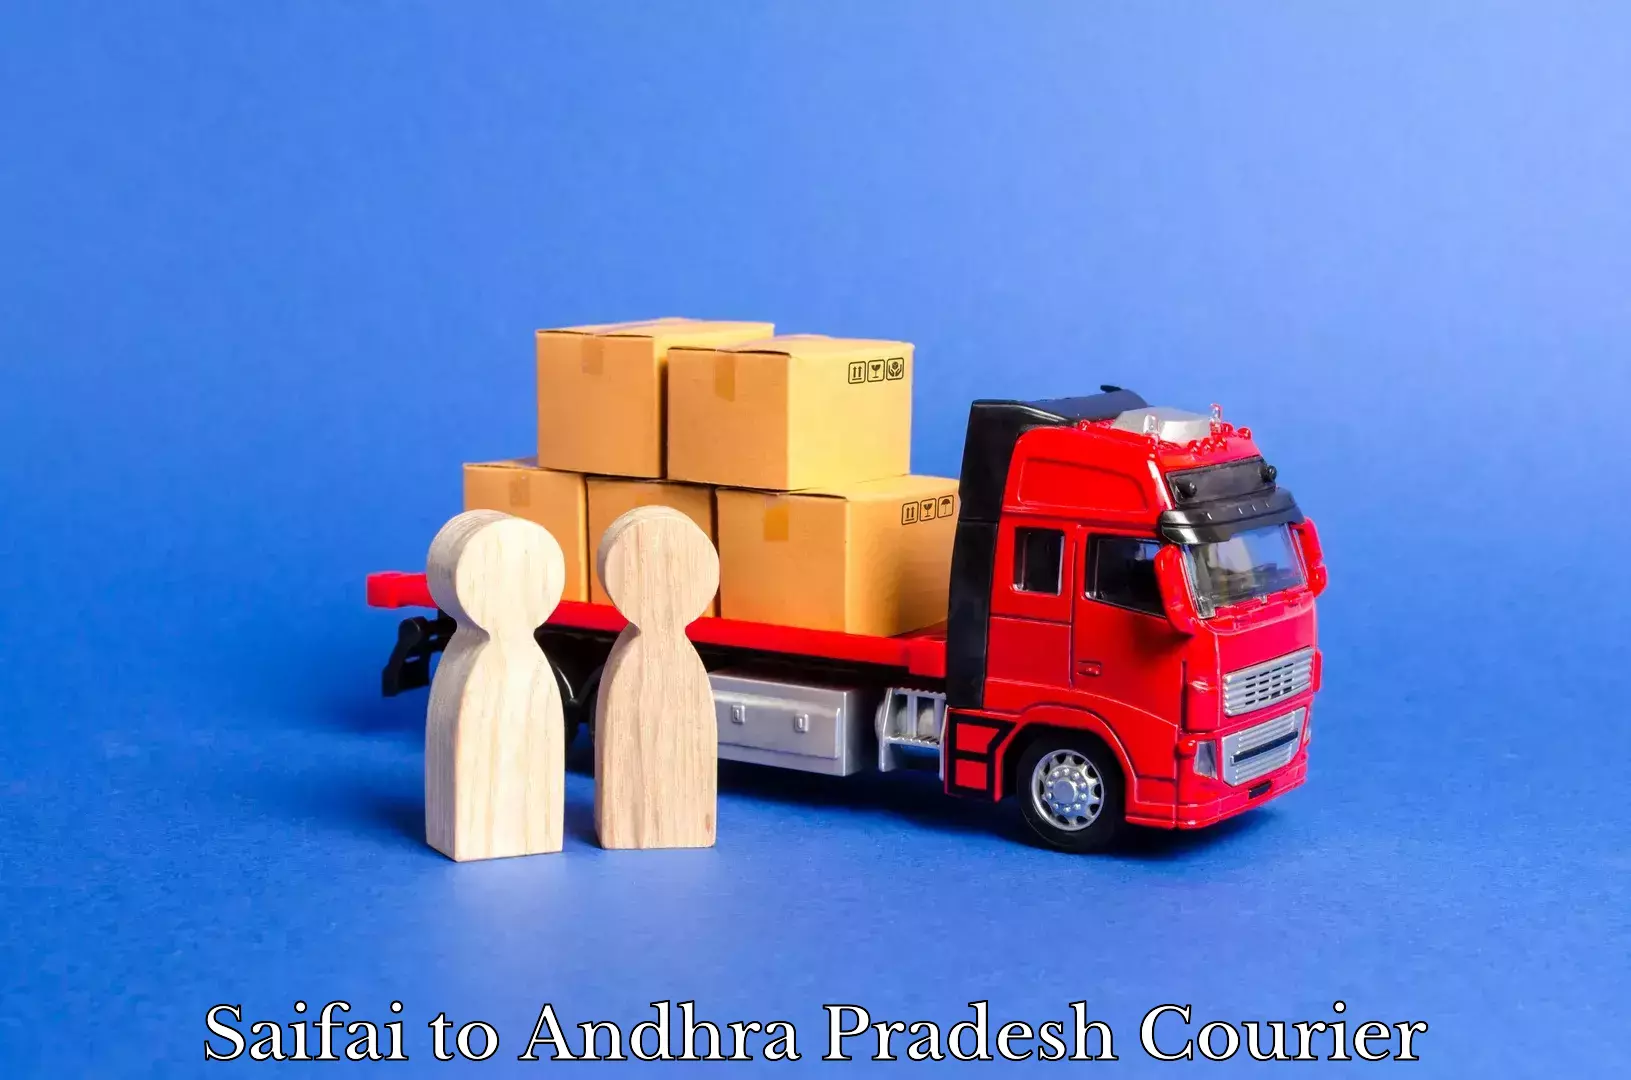 Personal courier services Saifai to Andhra Pradesh